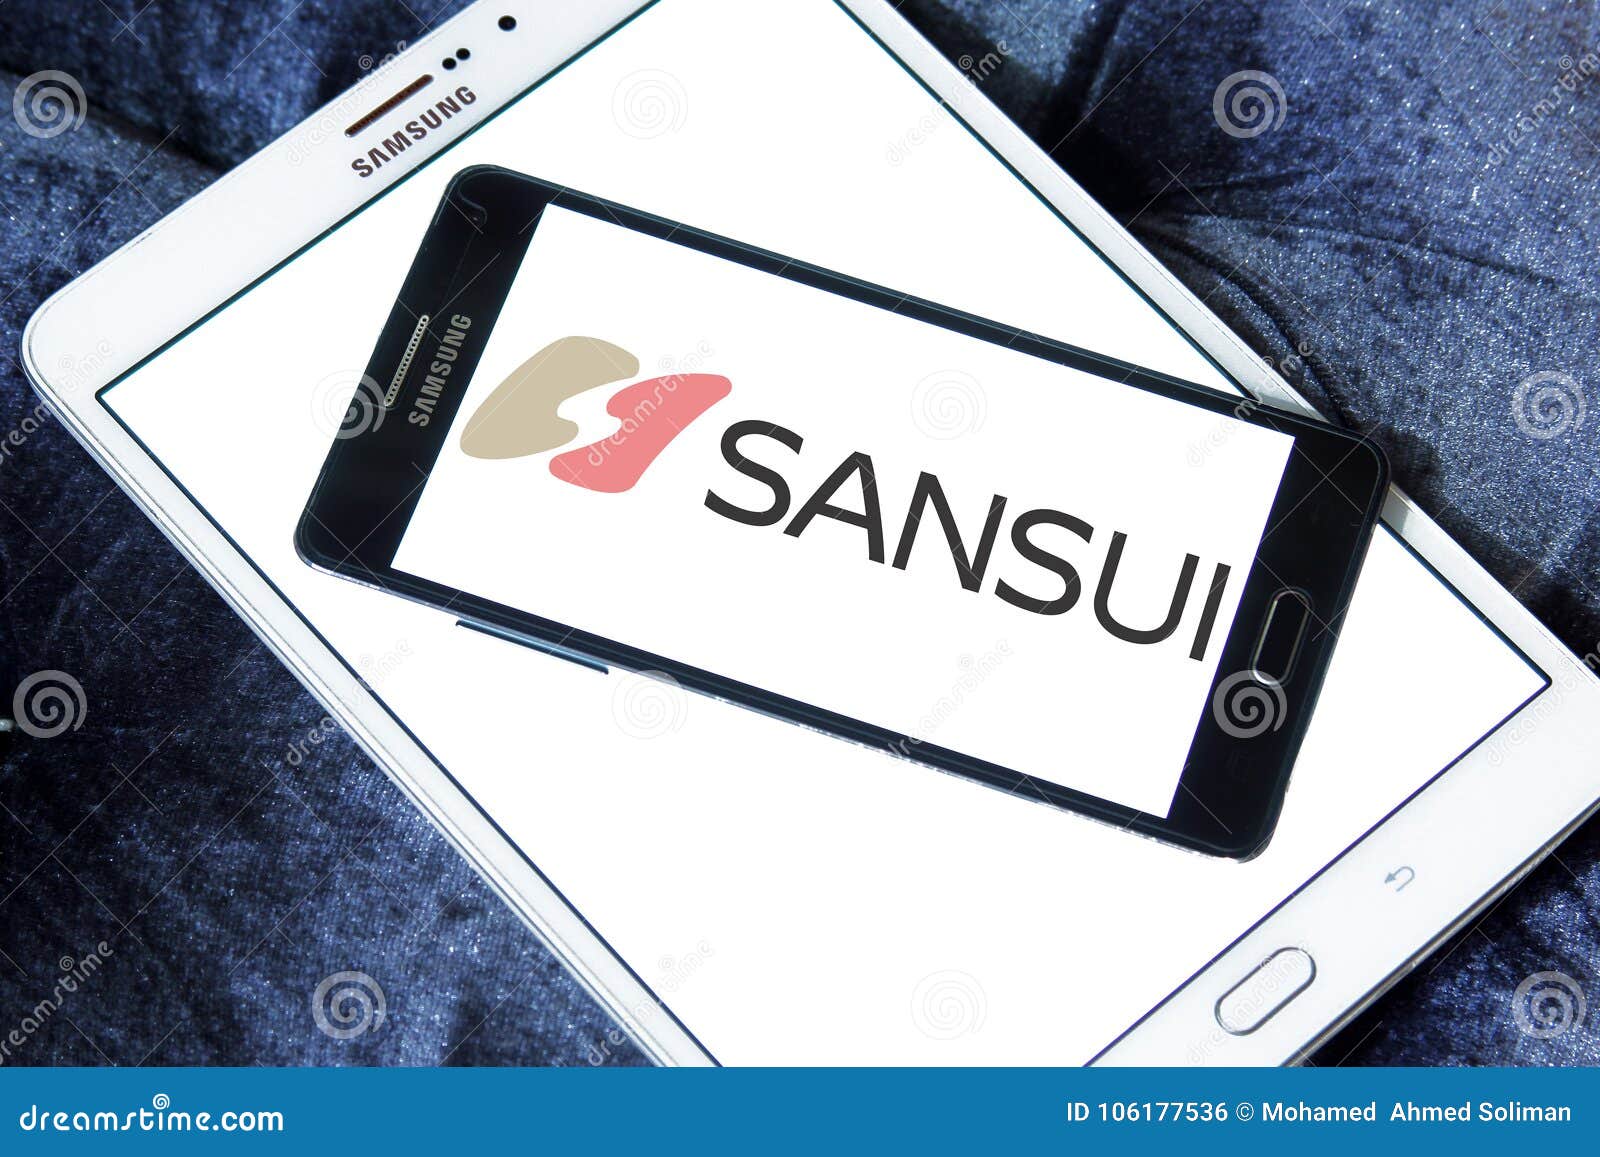 File:Sansui logo (1947-1987).png - Wikimedia Commons